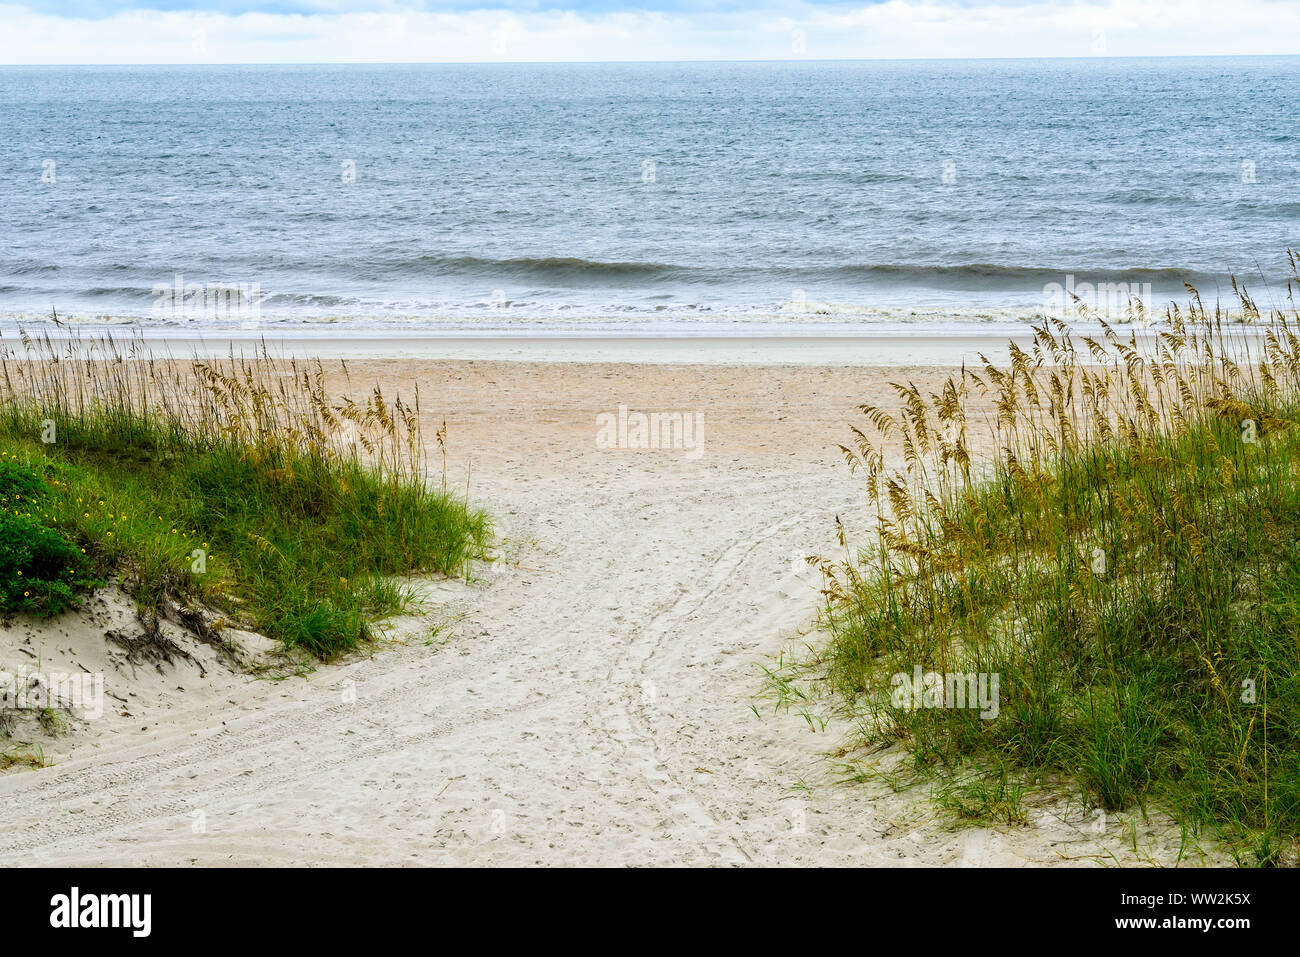 Beach and natural sea oats on the beach in Amelia Island, Florida Stock Photo